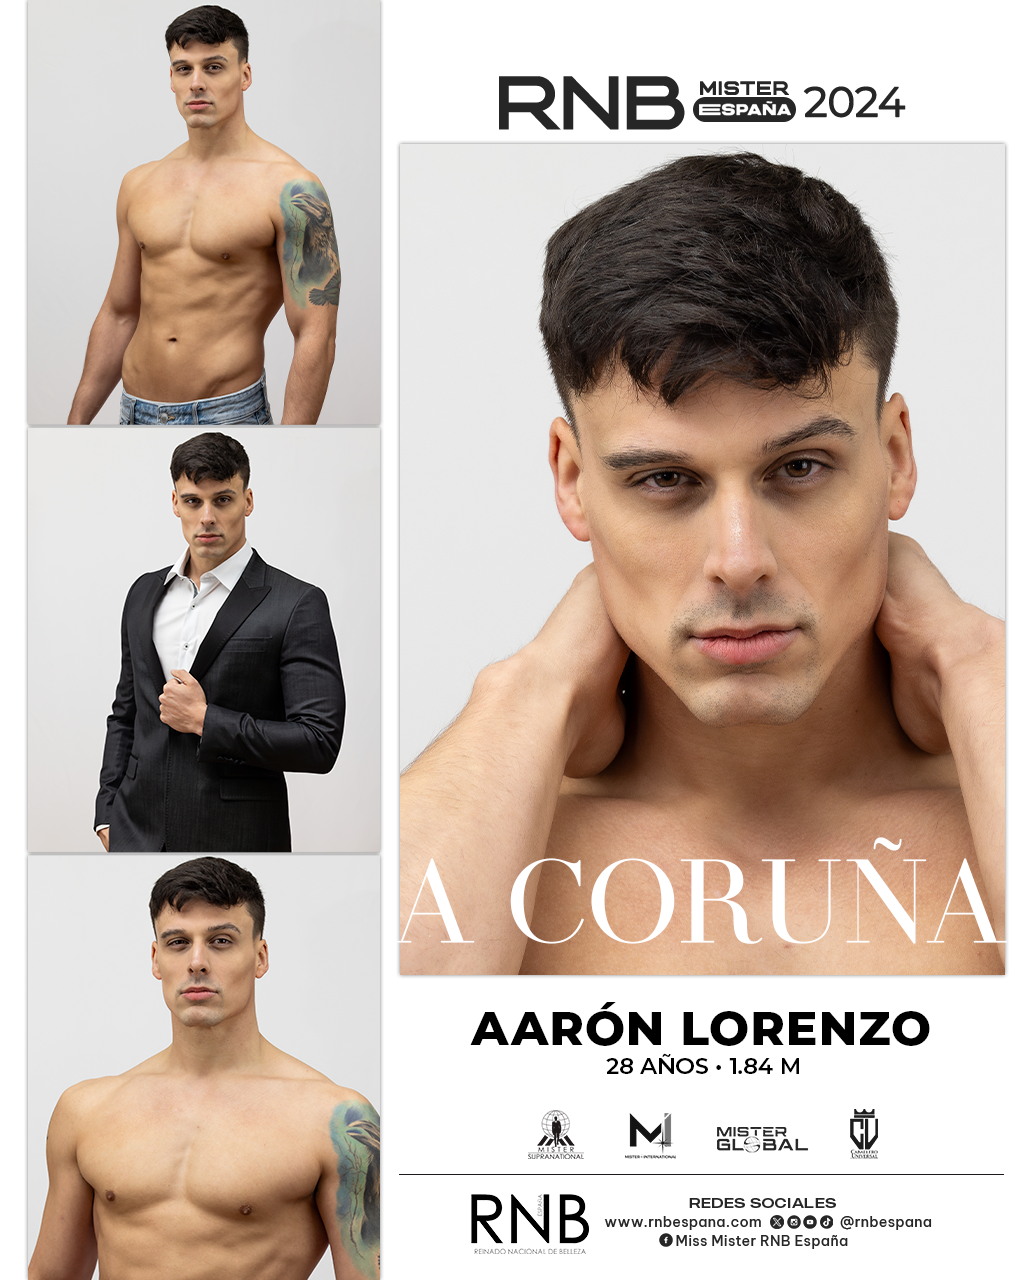 Mister RNB A Coruna 2024 Aaron Lorenzo Banner